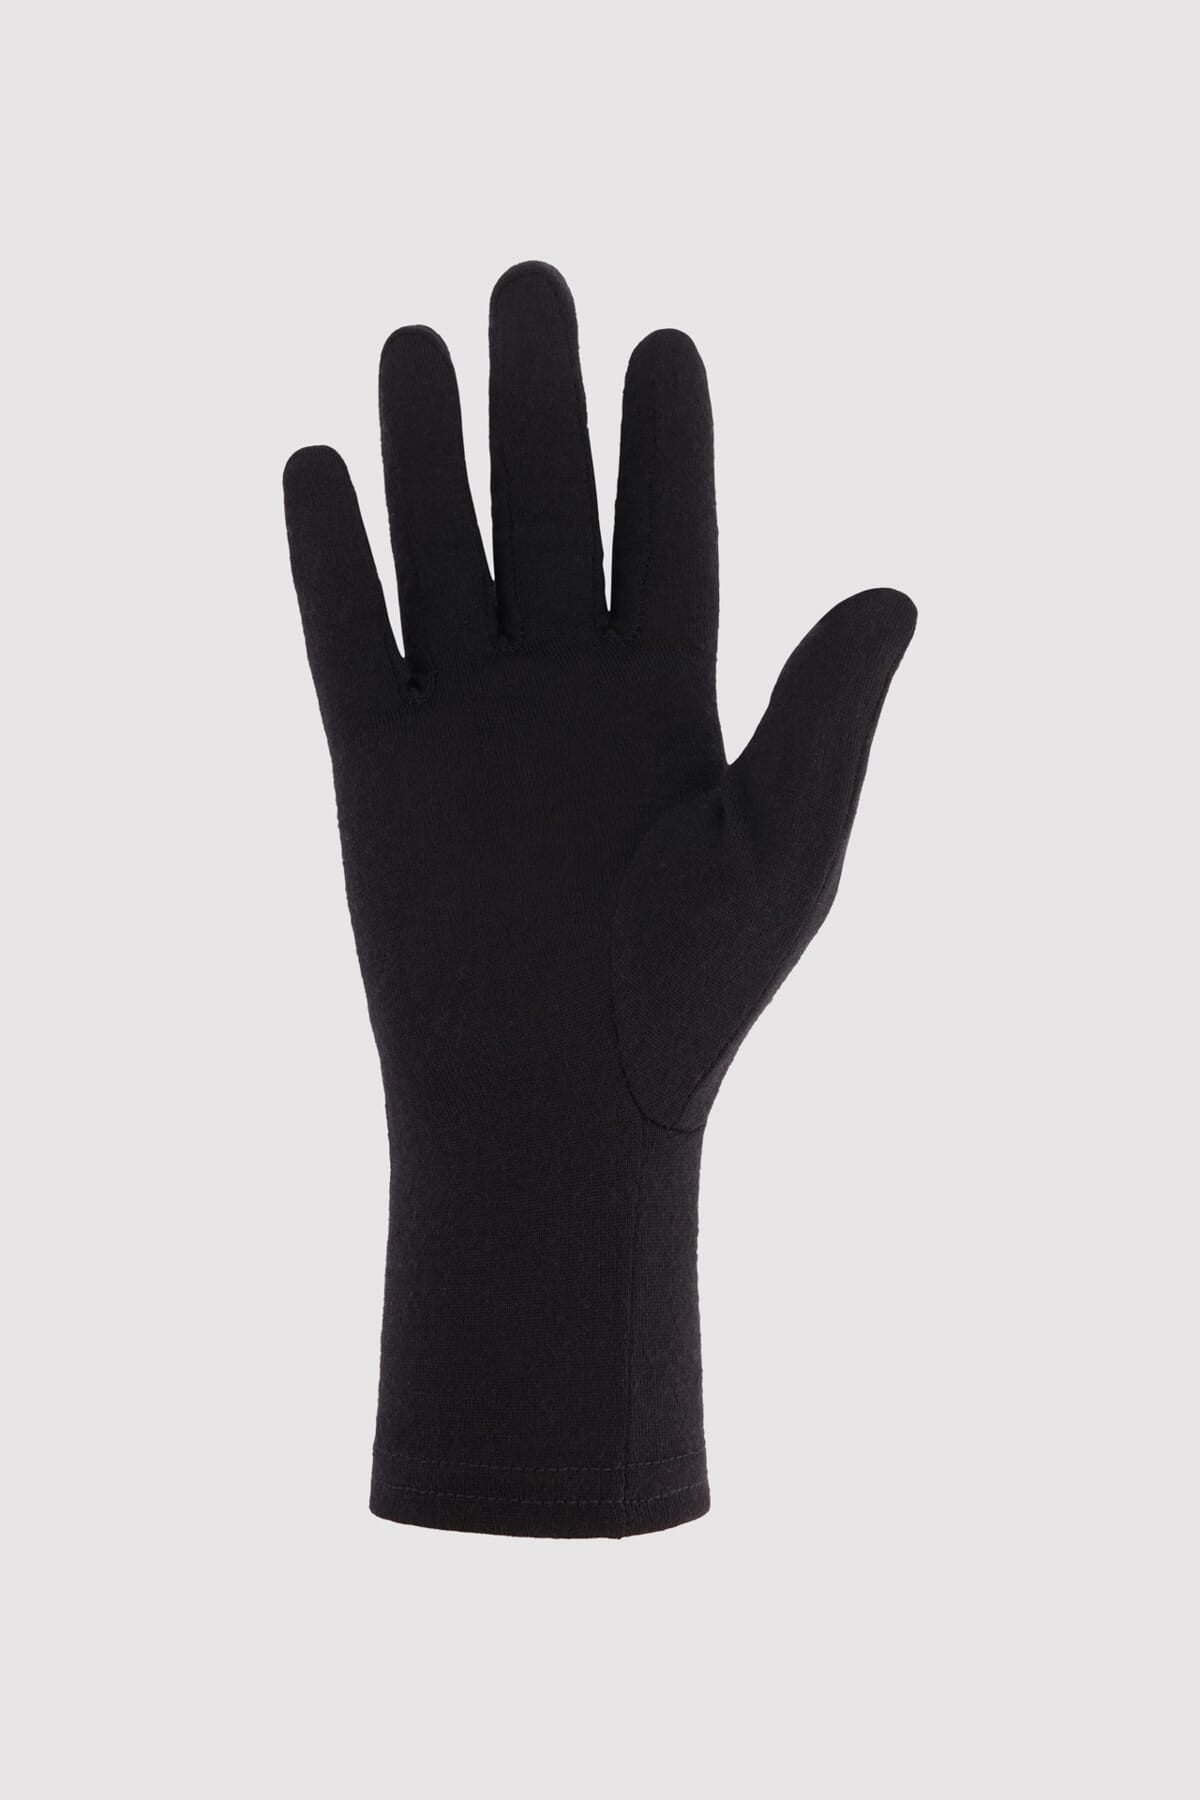 Volta Merino Glove Liner - Black